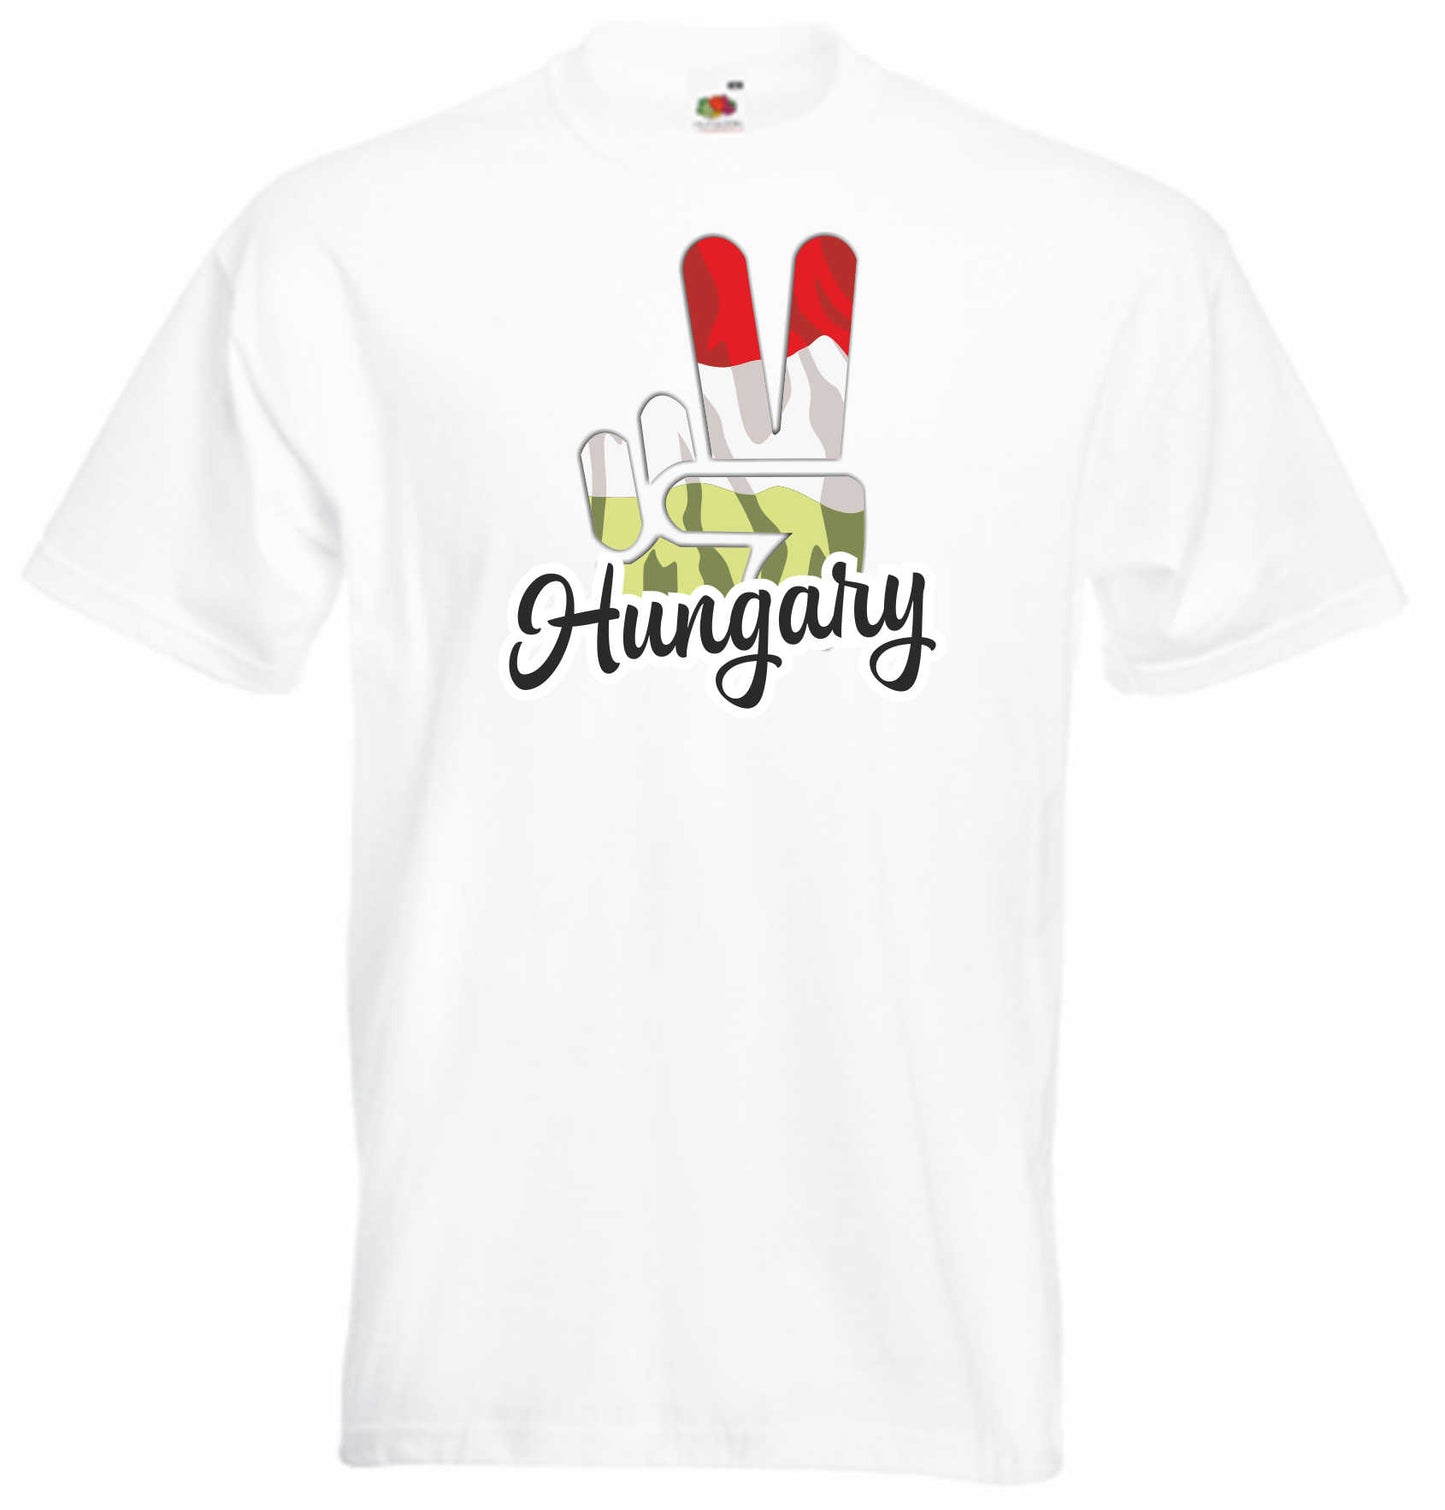 T-Shirt Herren - Victory - Flagge / Fahne - Hungary - Sieg